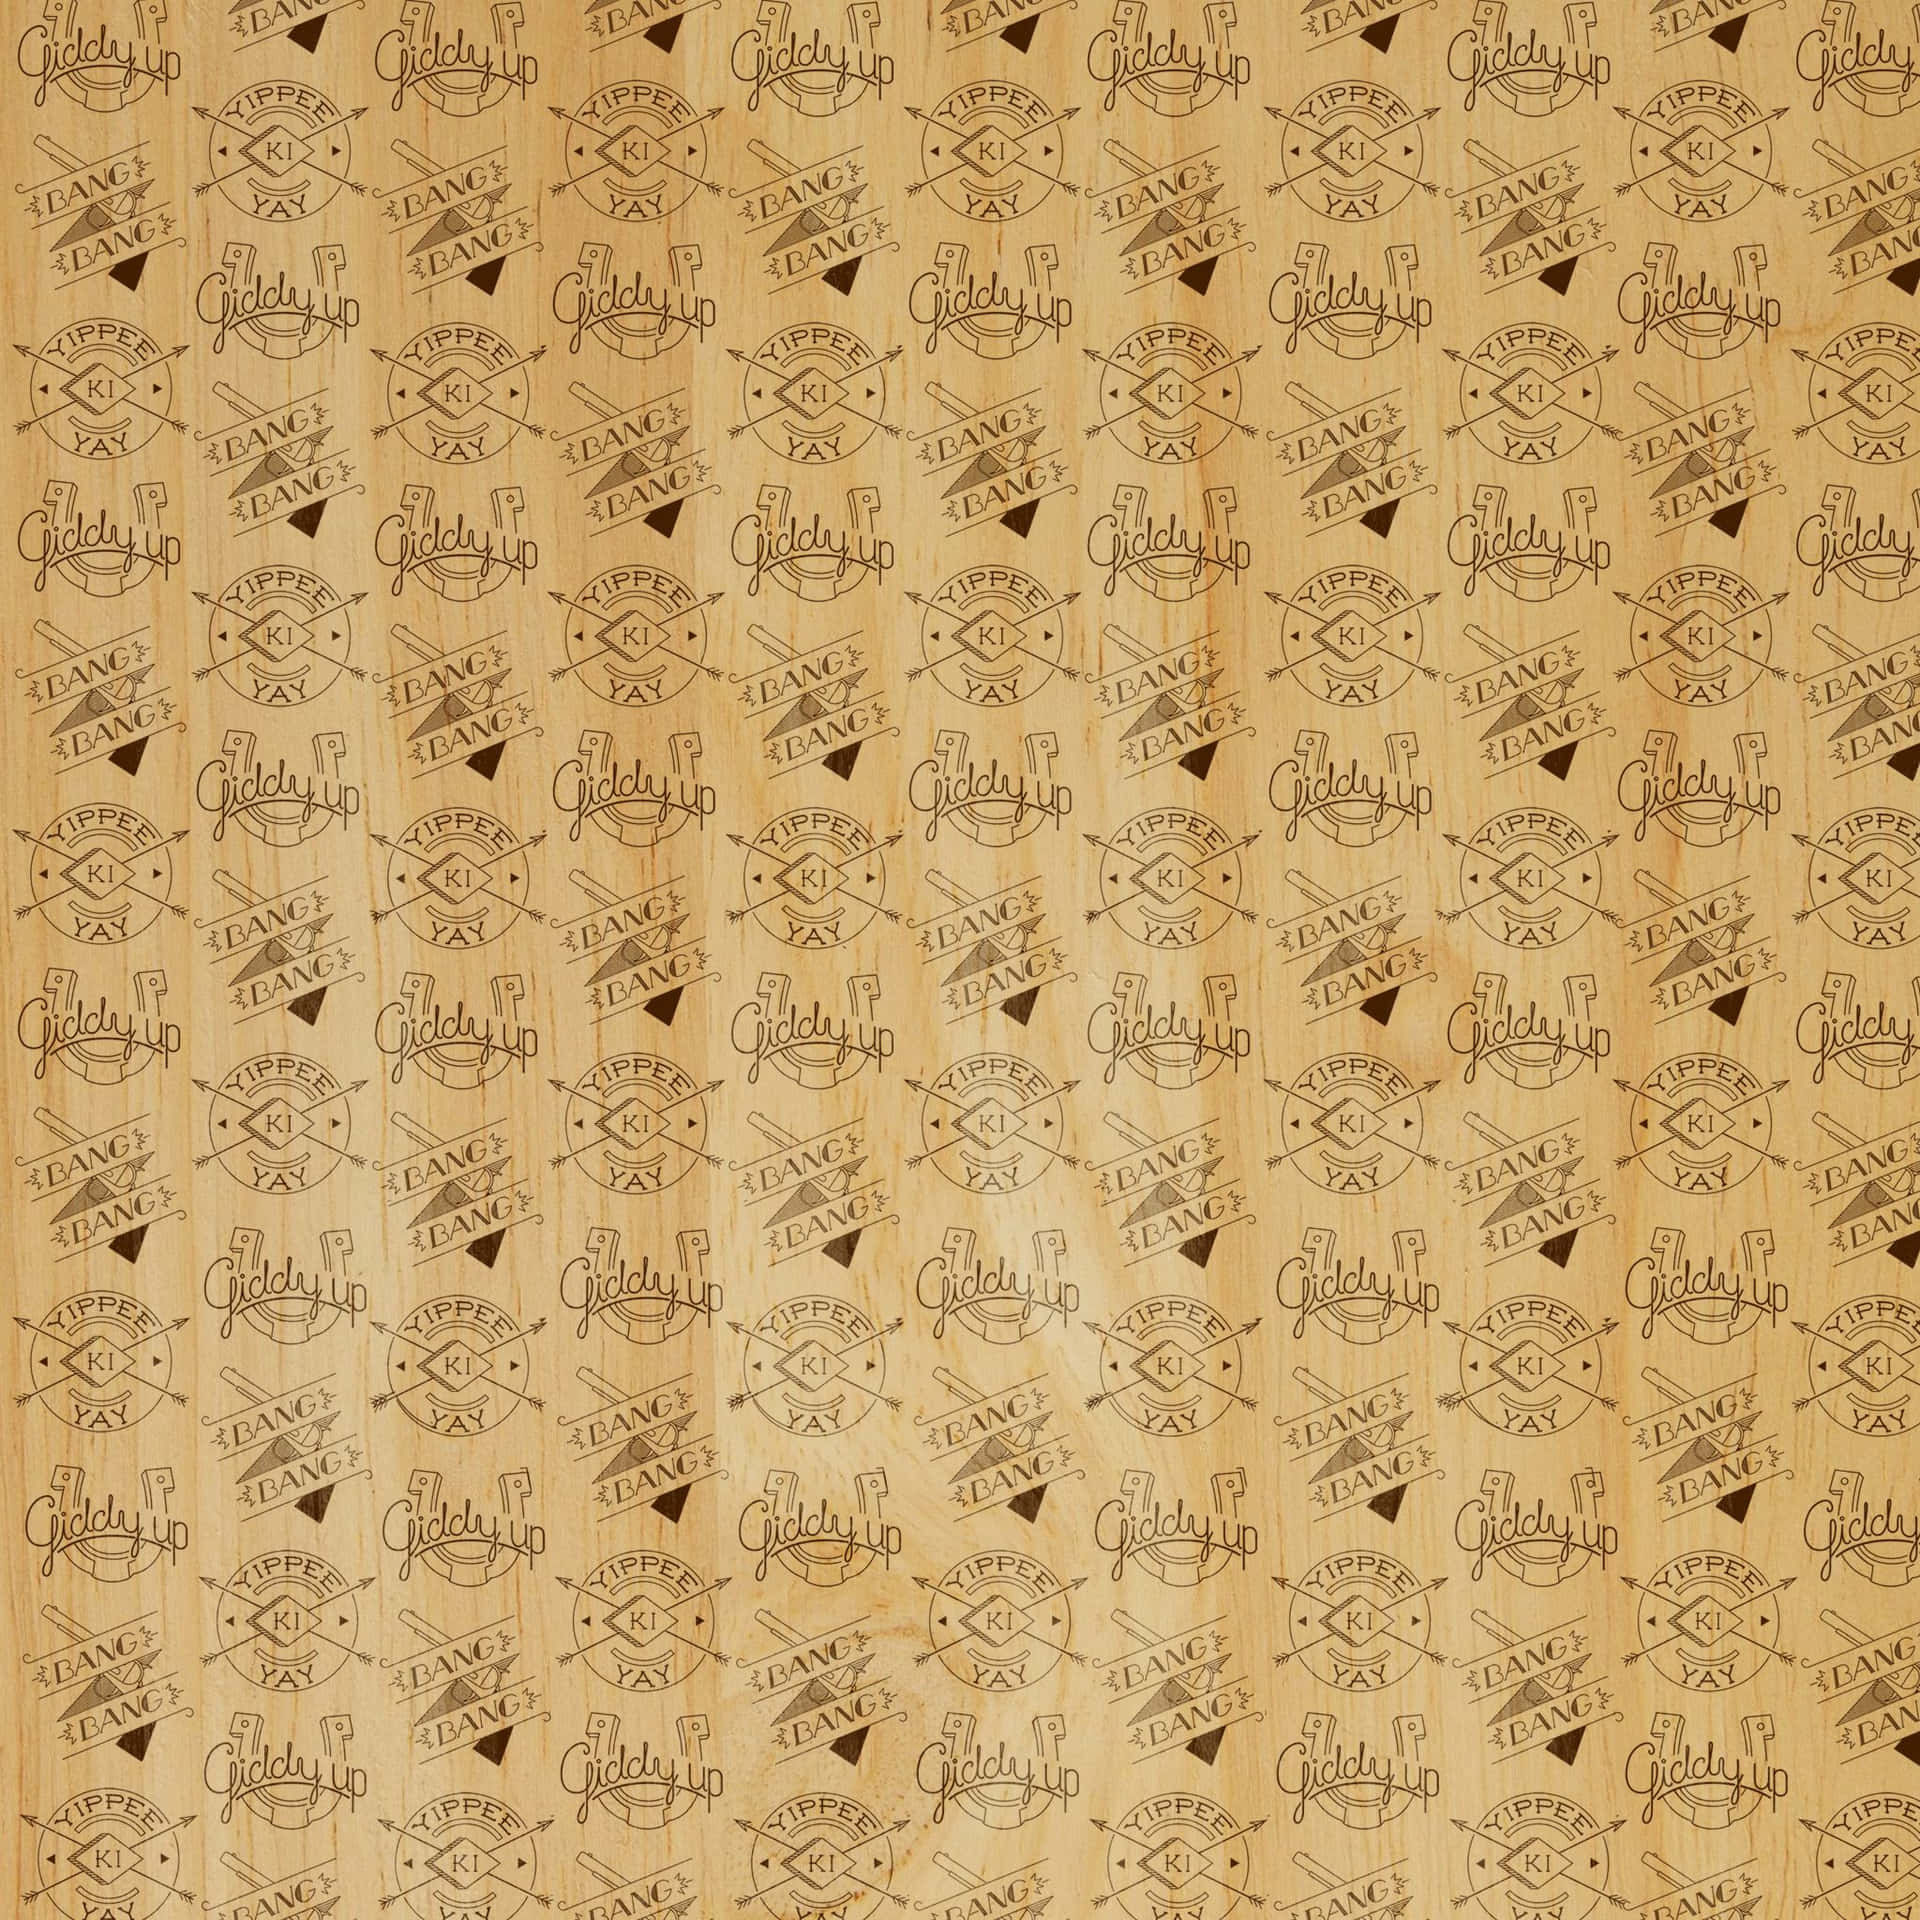 Sötvästernkollage Wallpaper